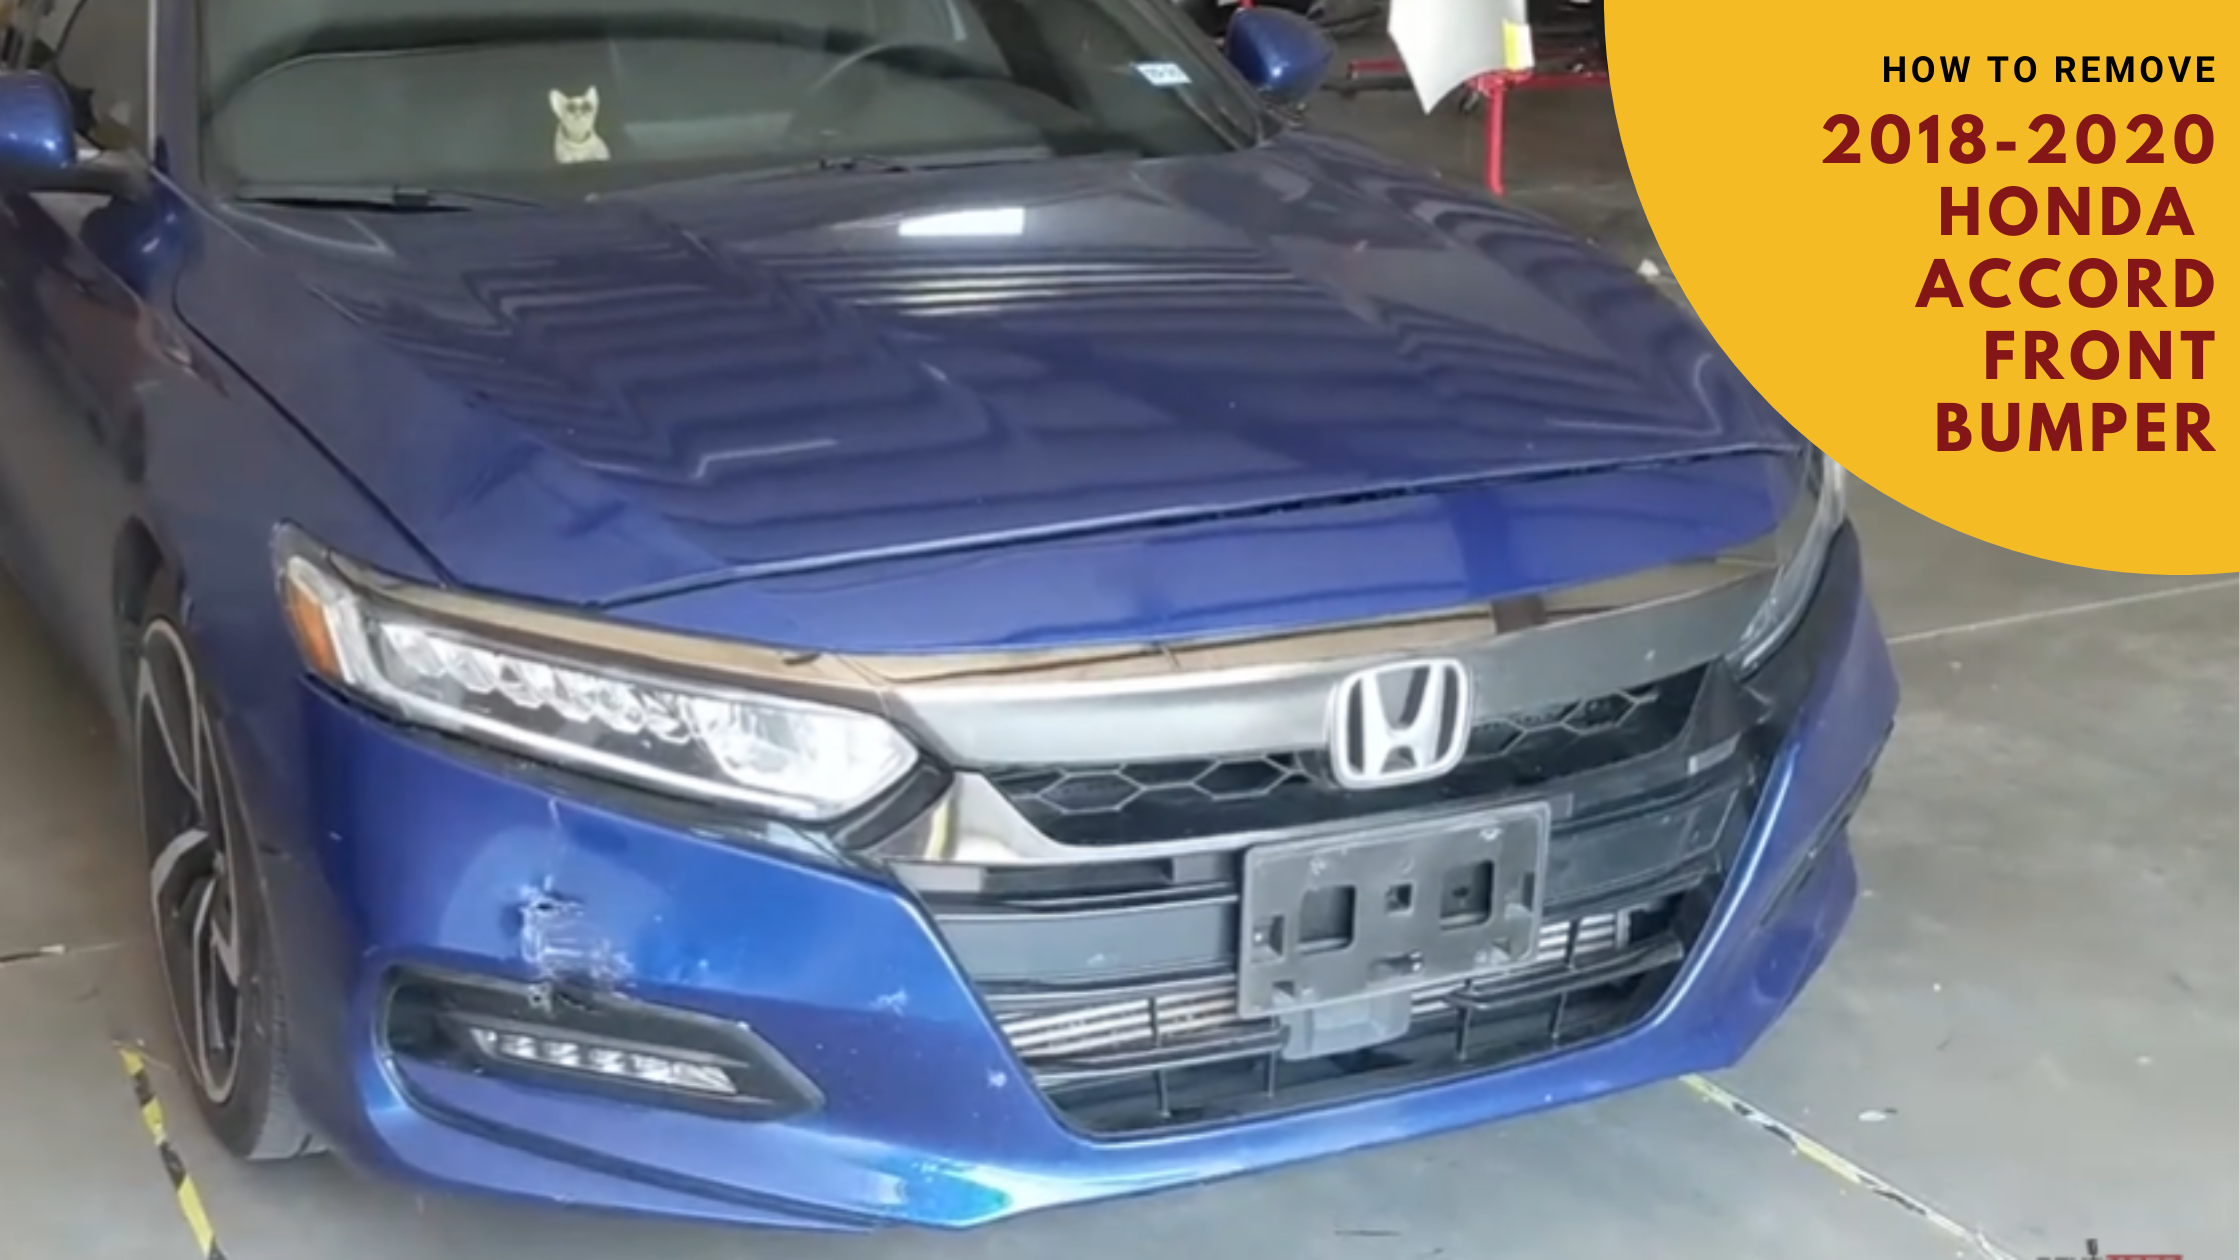 How to remove 2018-2020 Honda Accord Front Bumper